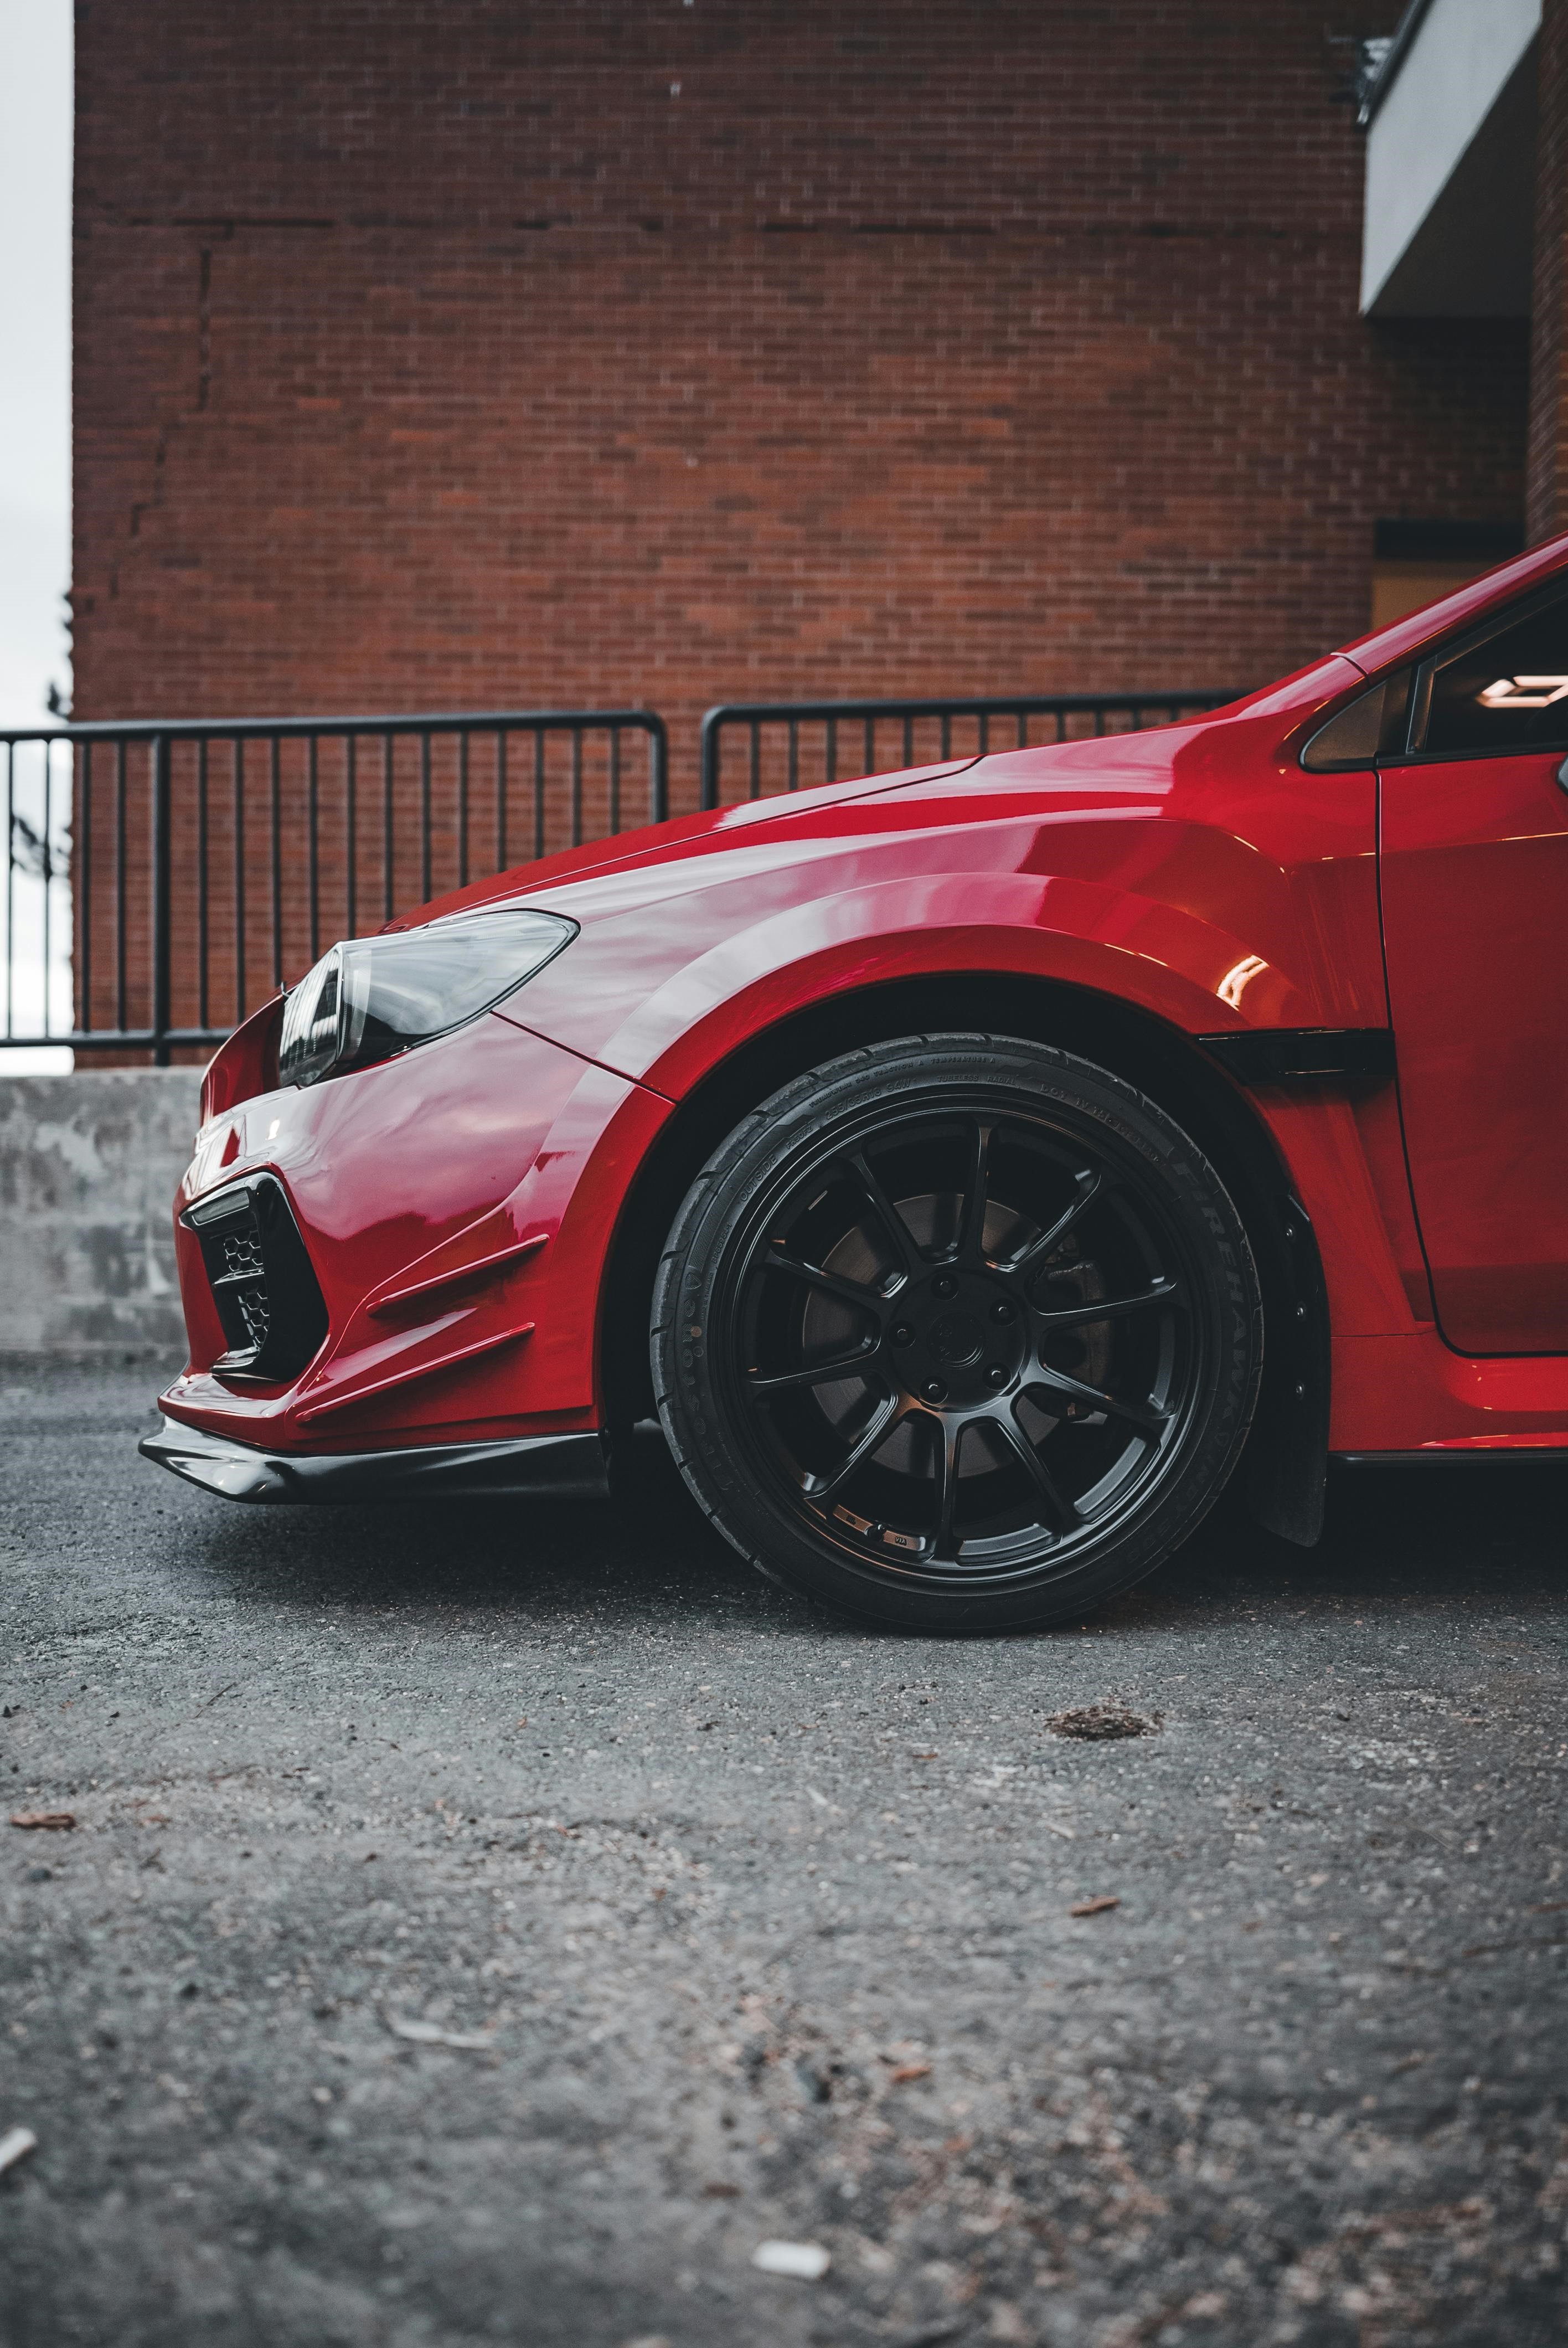 Red Subaru WRX with black powder-coated wheels.